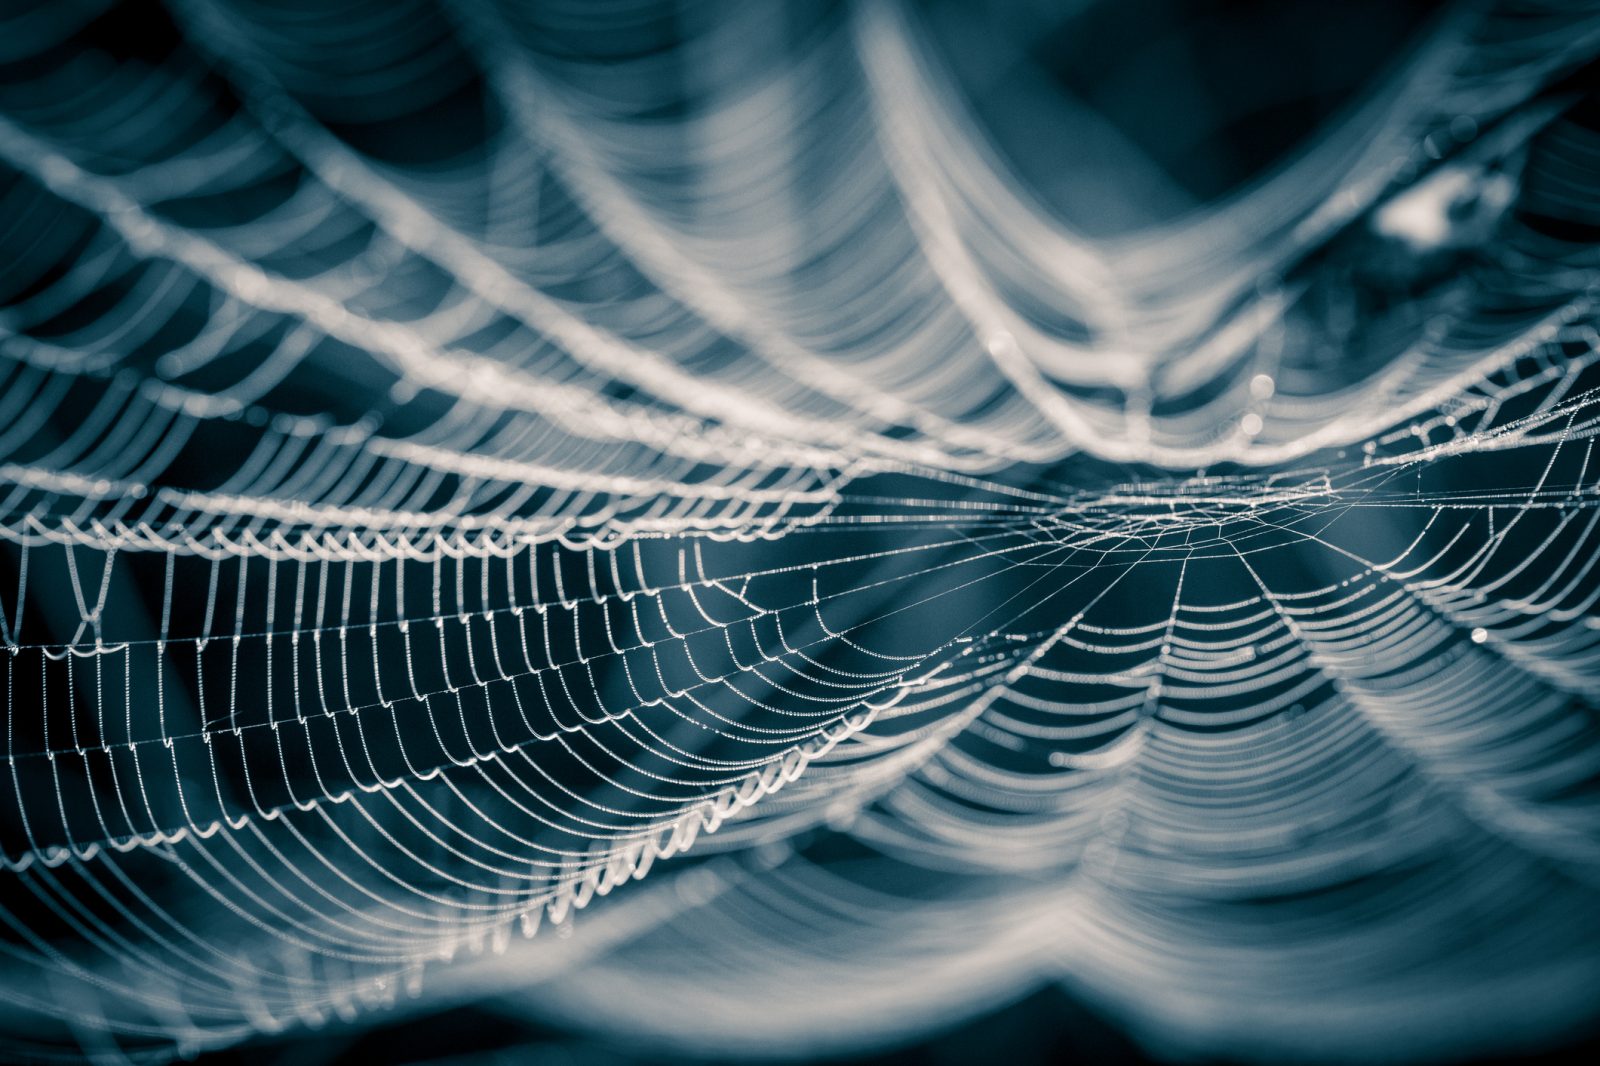 Background image: Spider Web